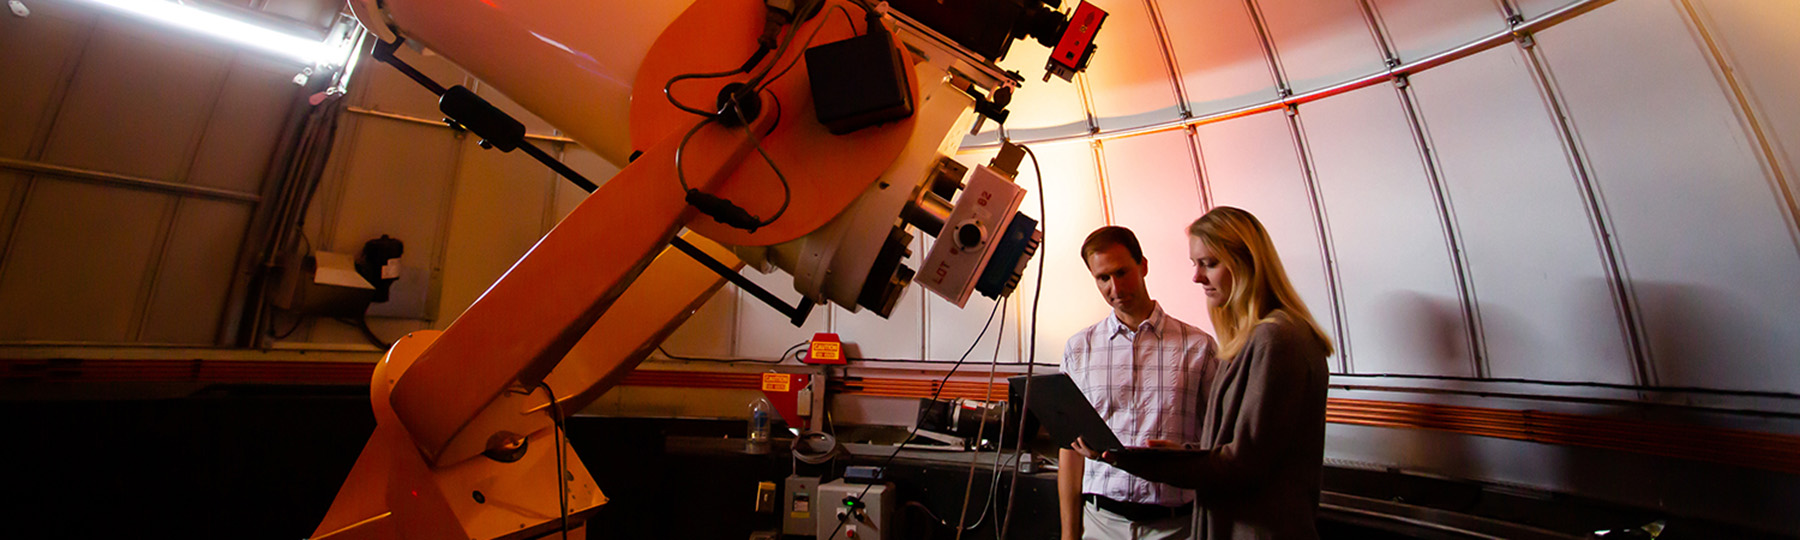 McNair Scholar and faculty member using large telescope